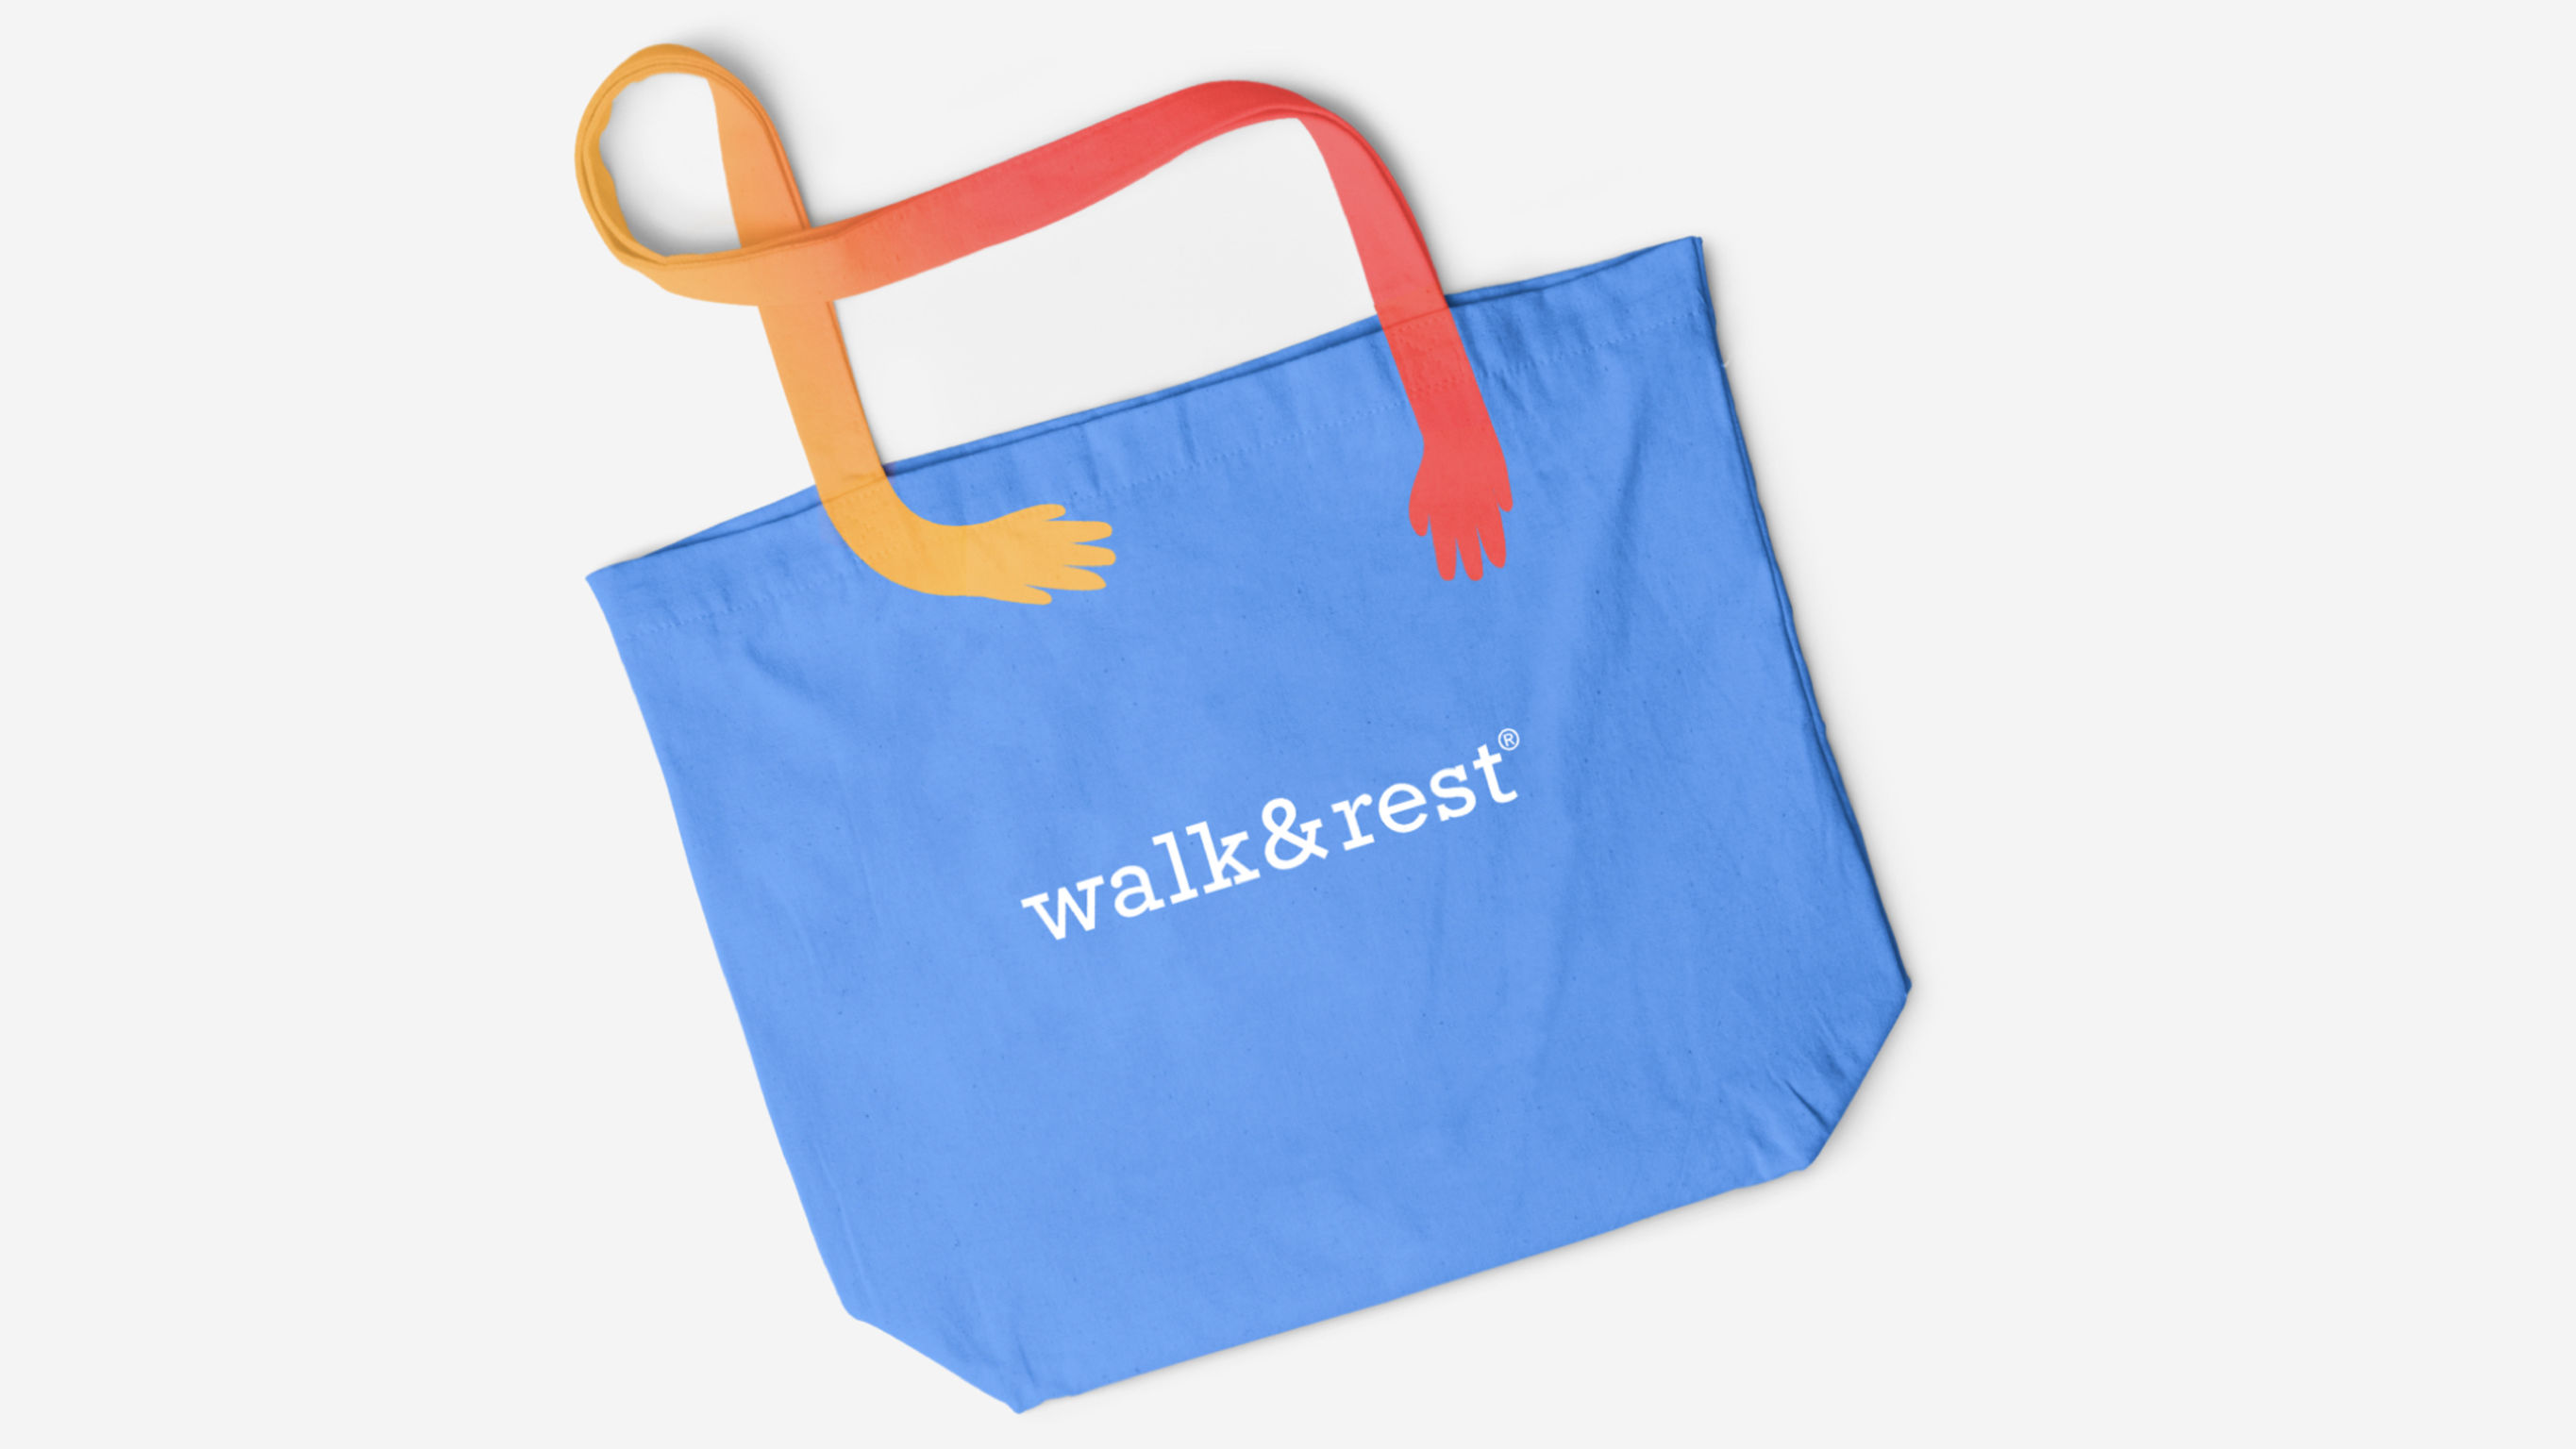 walk&rest rebranding design (FMCG)